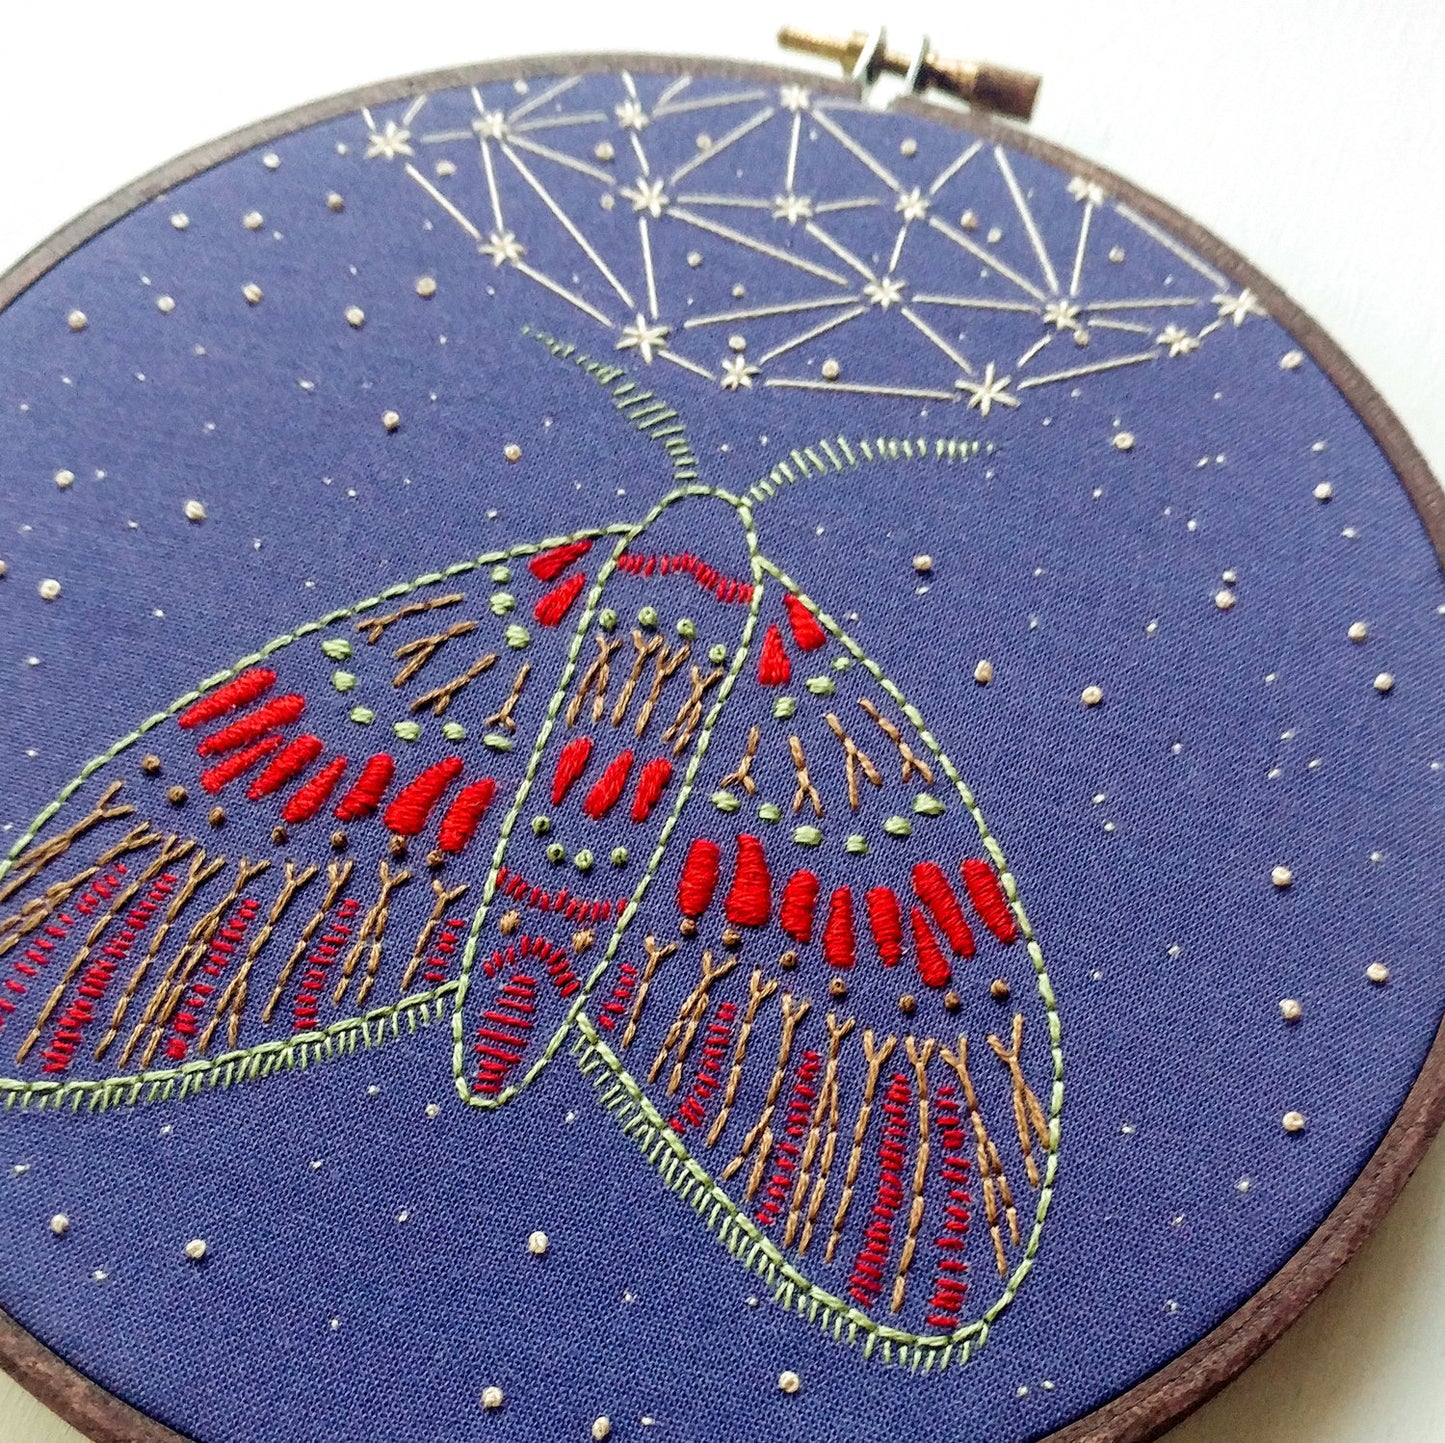 Midnight Flight - Cozyblue Handmade Embroidery Kit